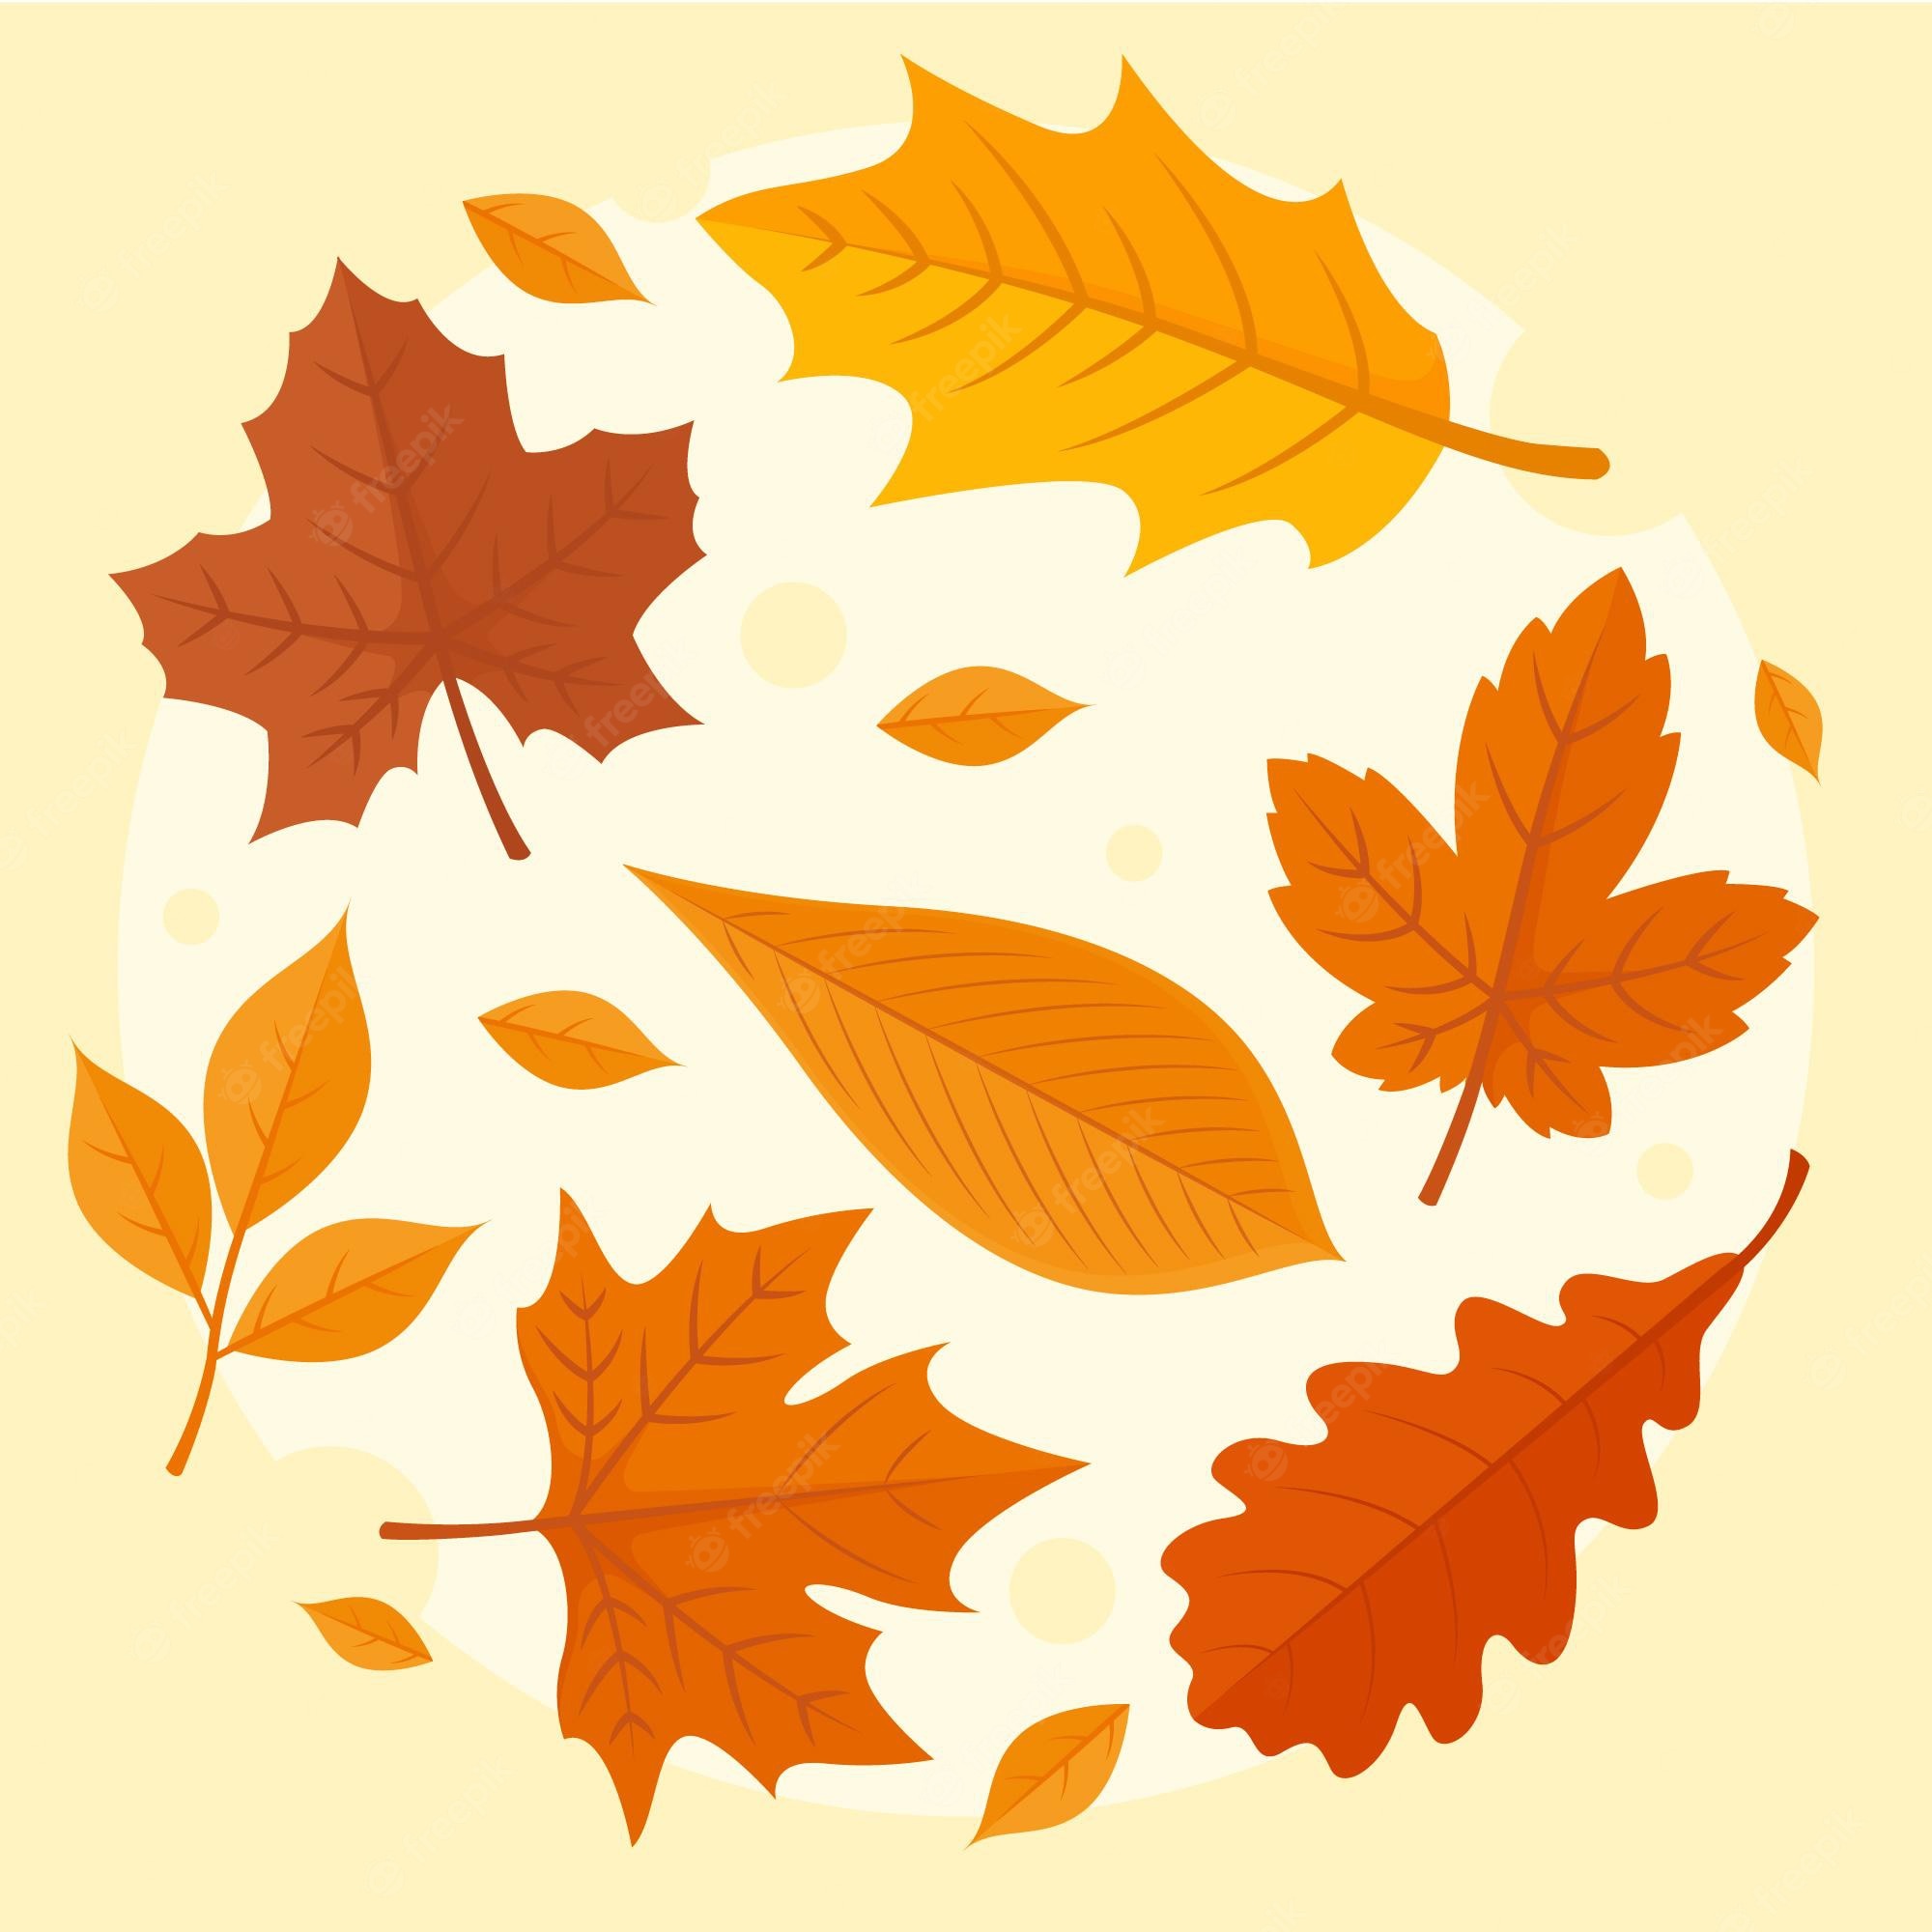 Autumn leaves cartoon Image. Free Vectors, & PSD